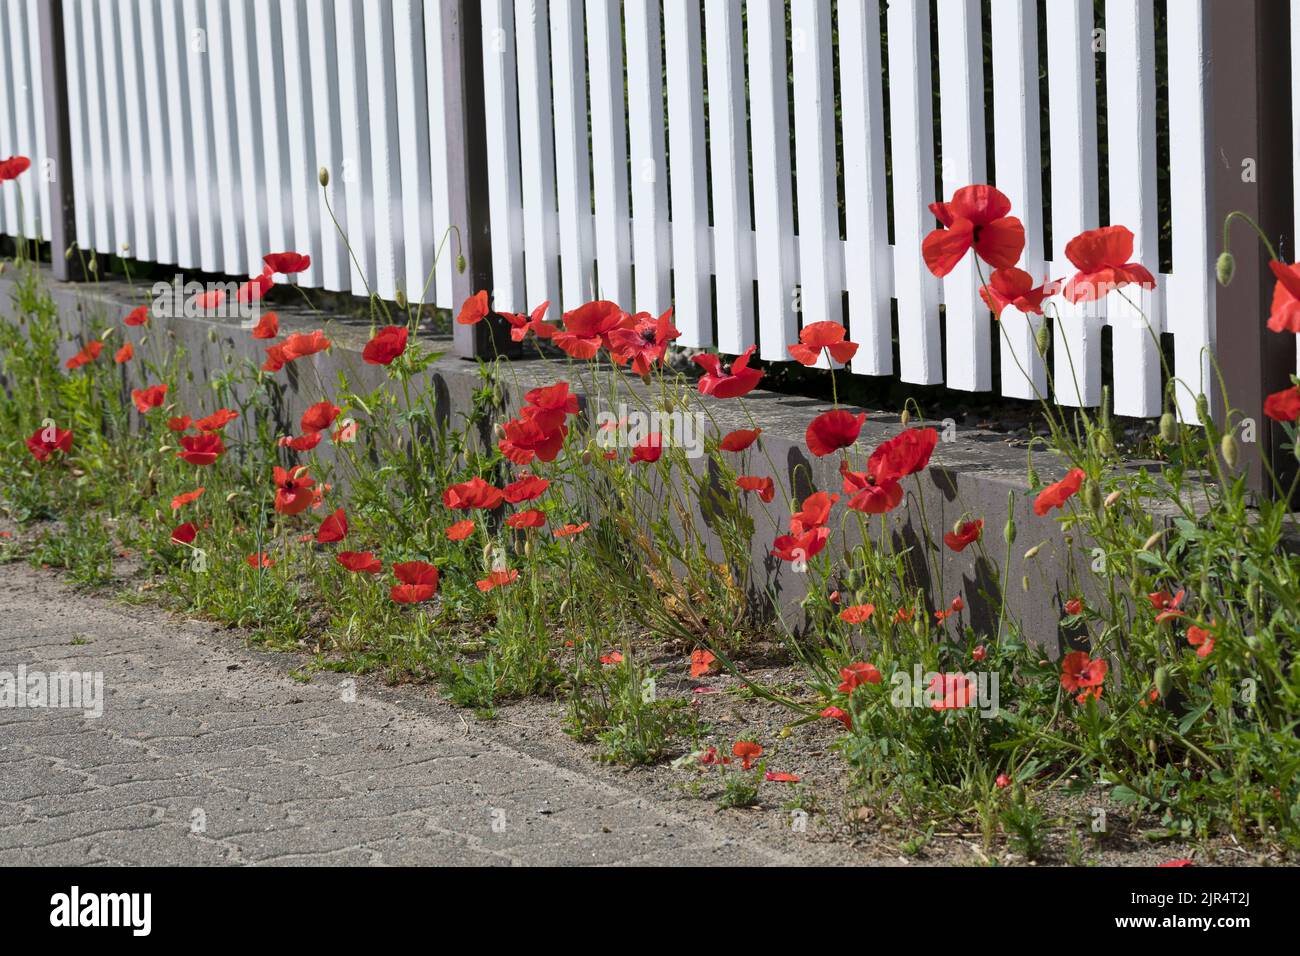 Common poppy, Corn poppy, Red poppy (Papaver rhoeas), at a garden fence, Germany Stock Photo